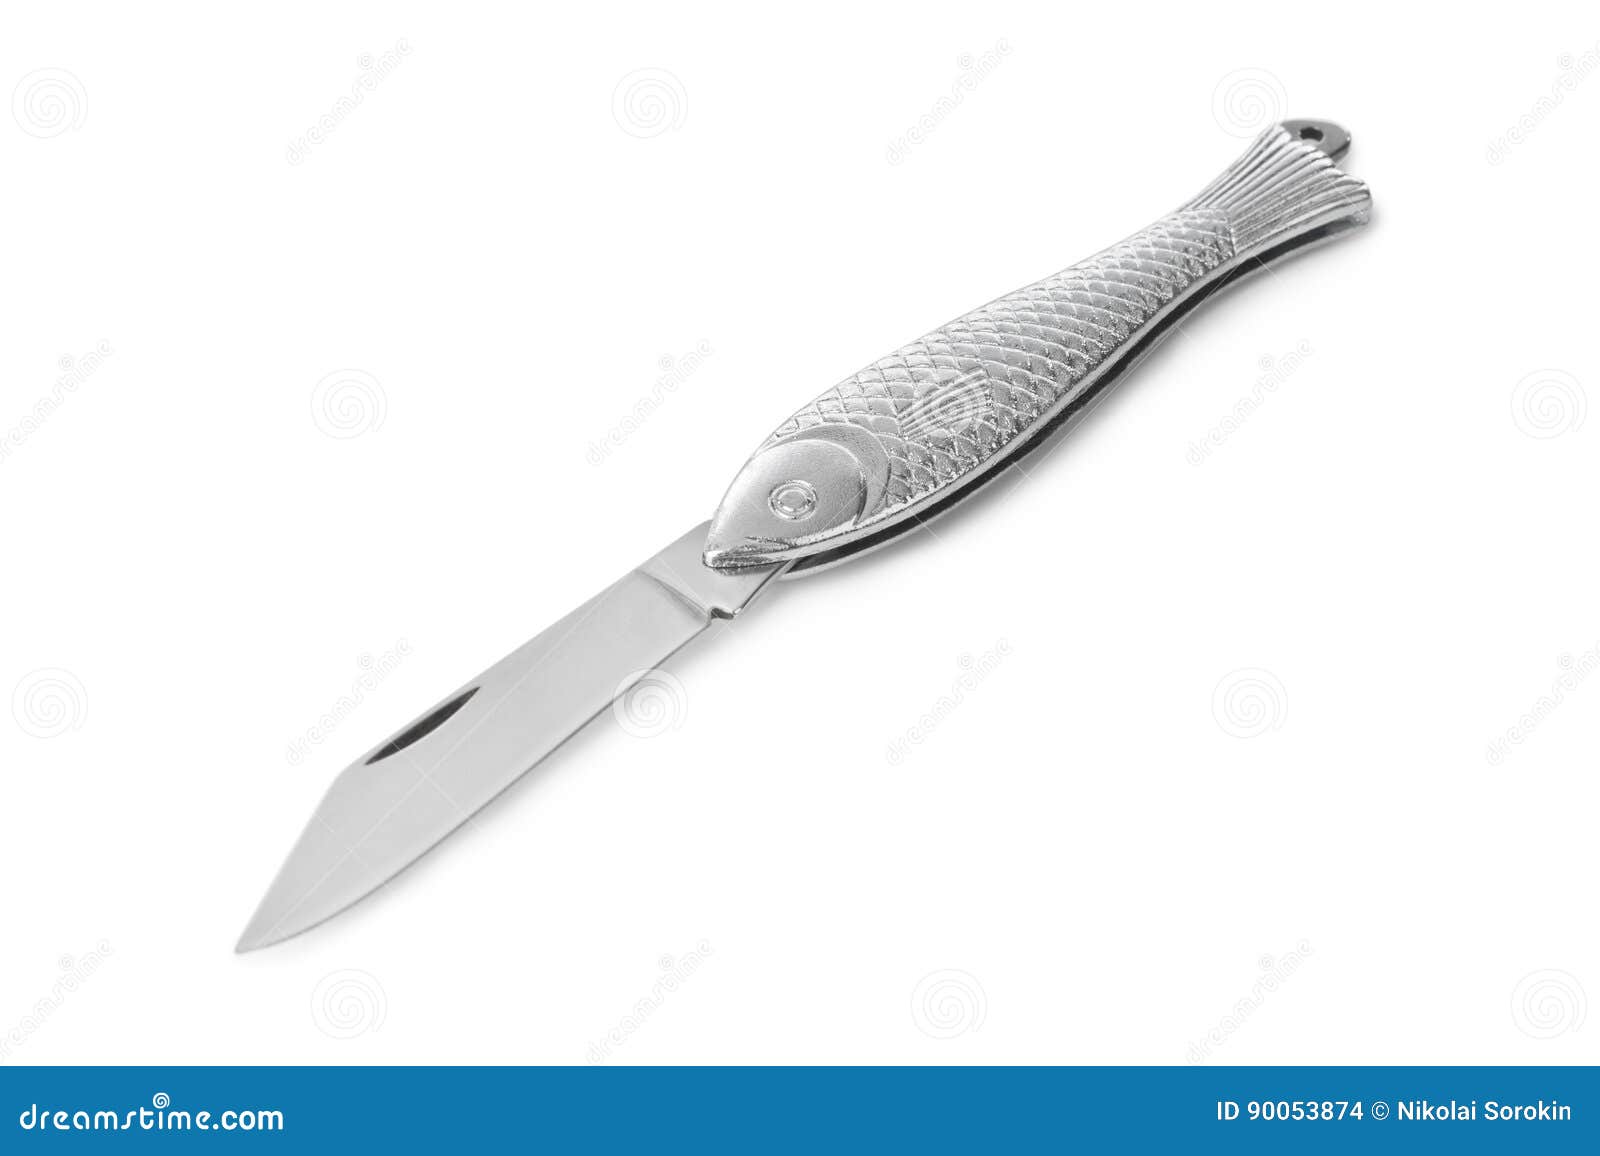 Fish shaped knife stock photo. Image of seafood, pocket - 90053874